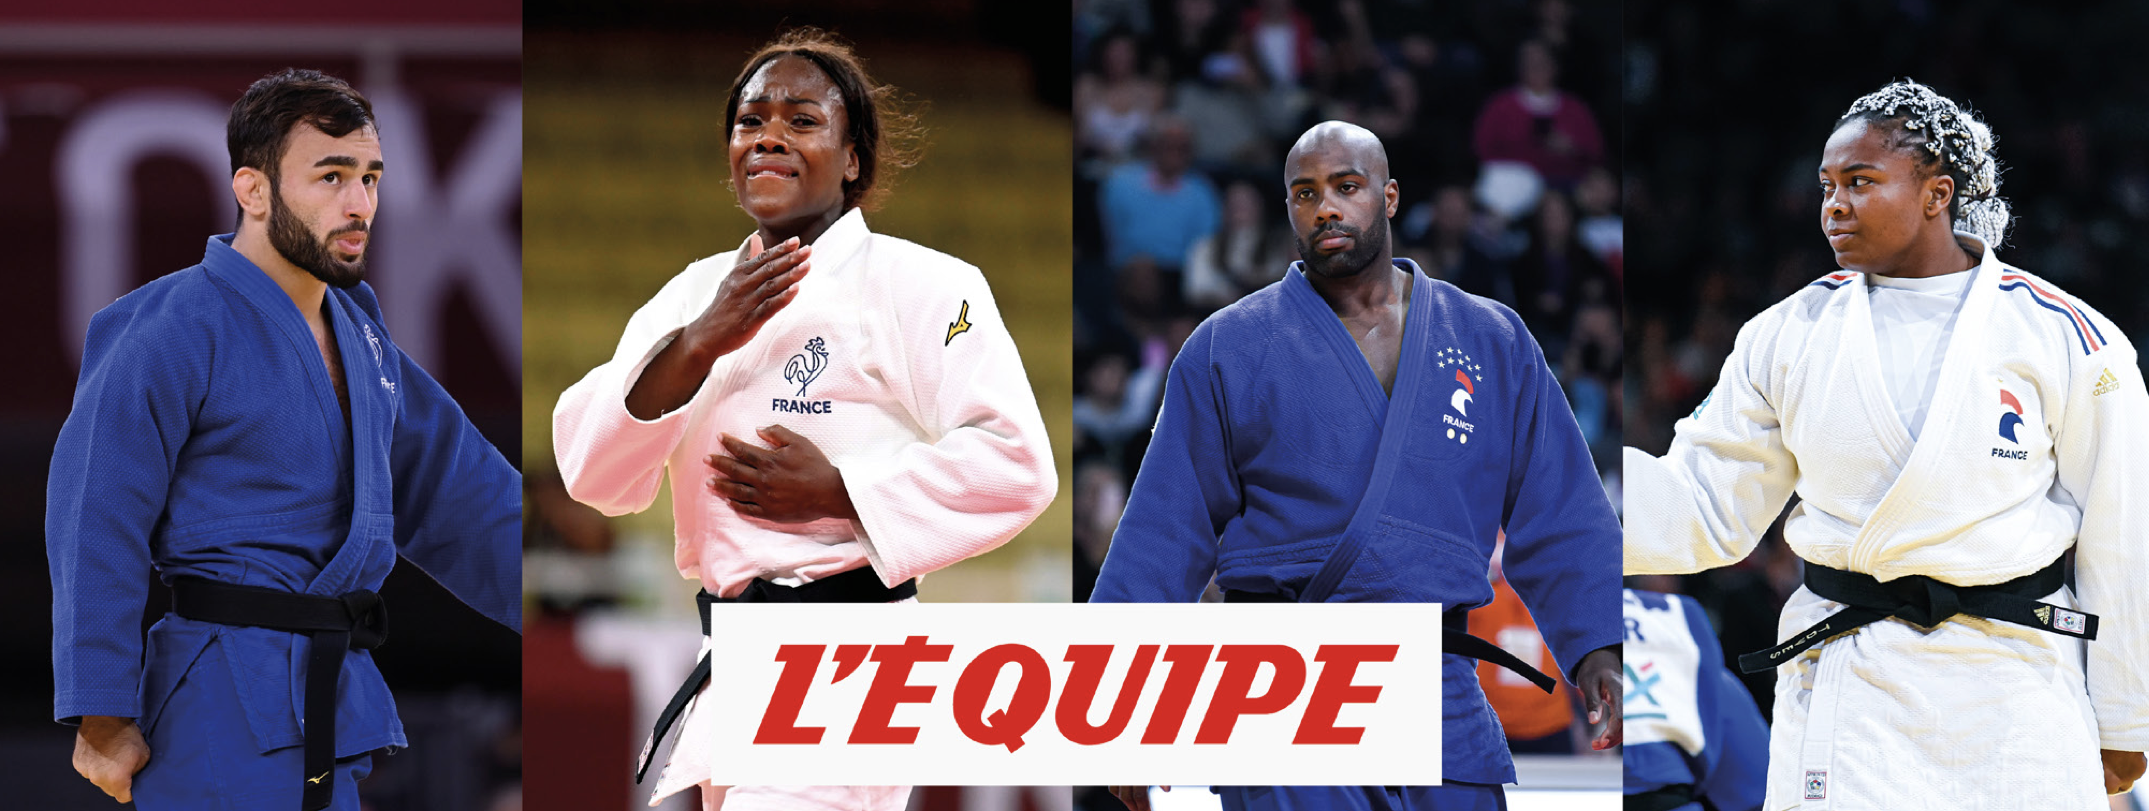 Droit TV La chaîne Léquipe diffusera les championnats du monde de judo 2023 (7-14 mai)